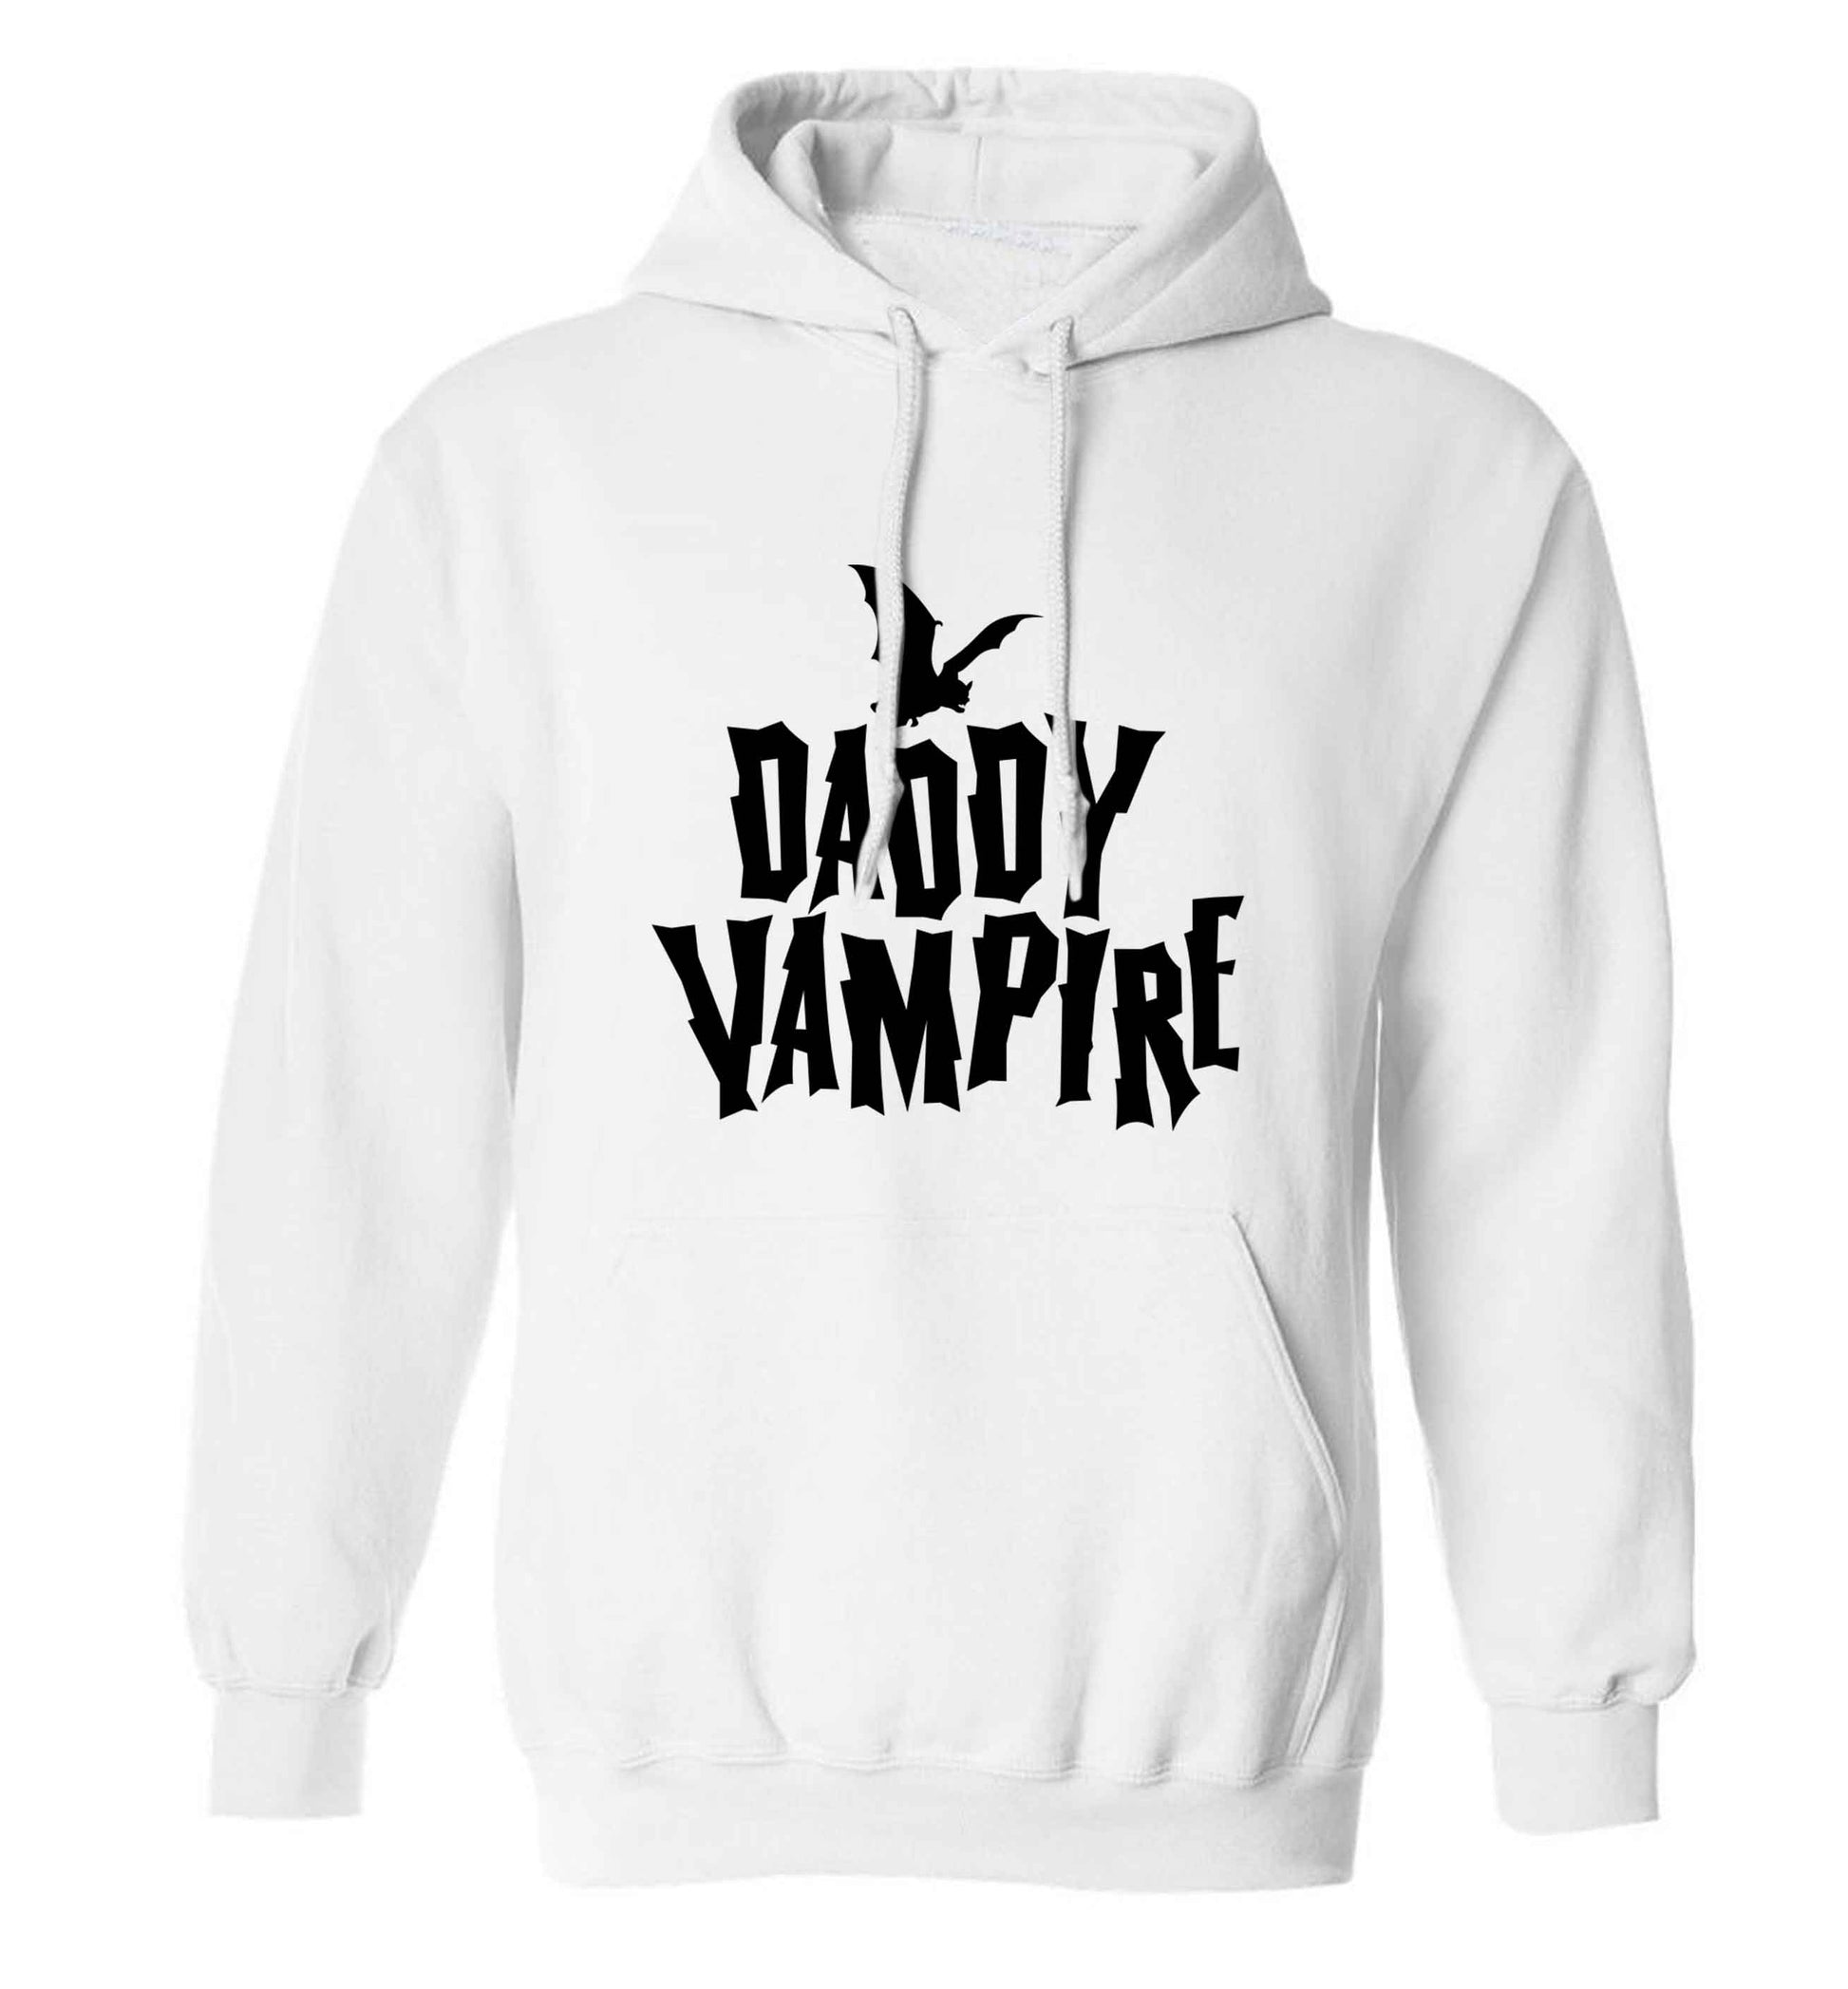 Daddy vampire adults unisex white hoodie 2XL